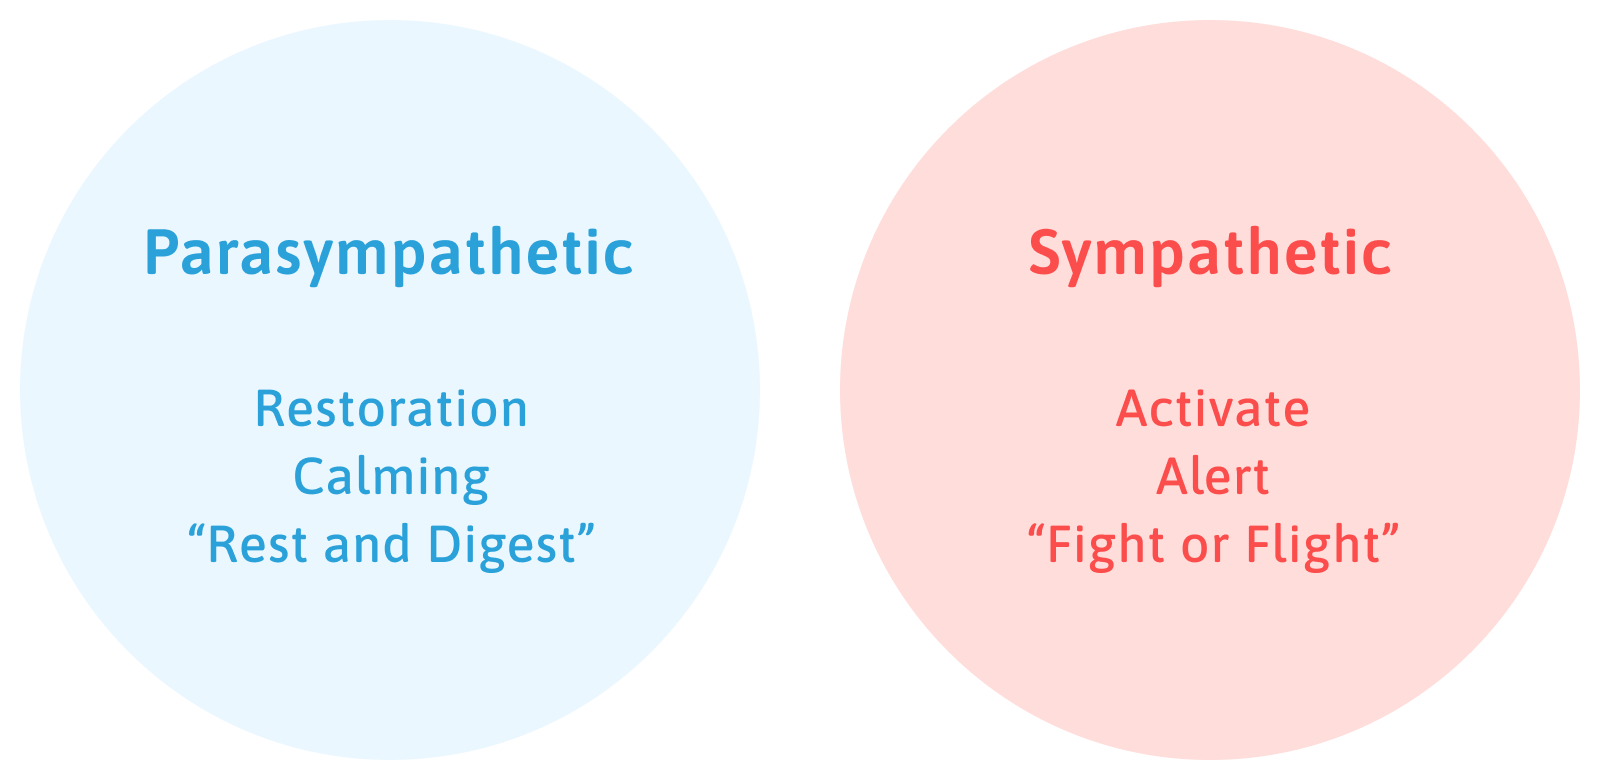 Parasympathetic vs Sympathetic: "Rest and Digest" vs "Fight or Flight"